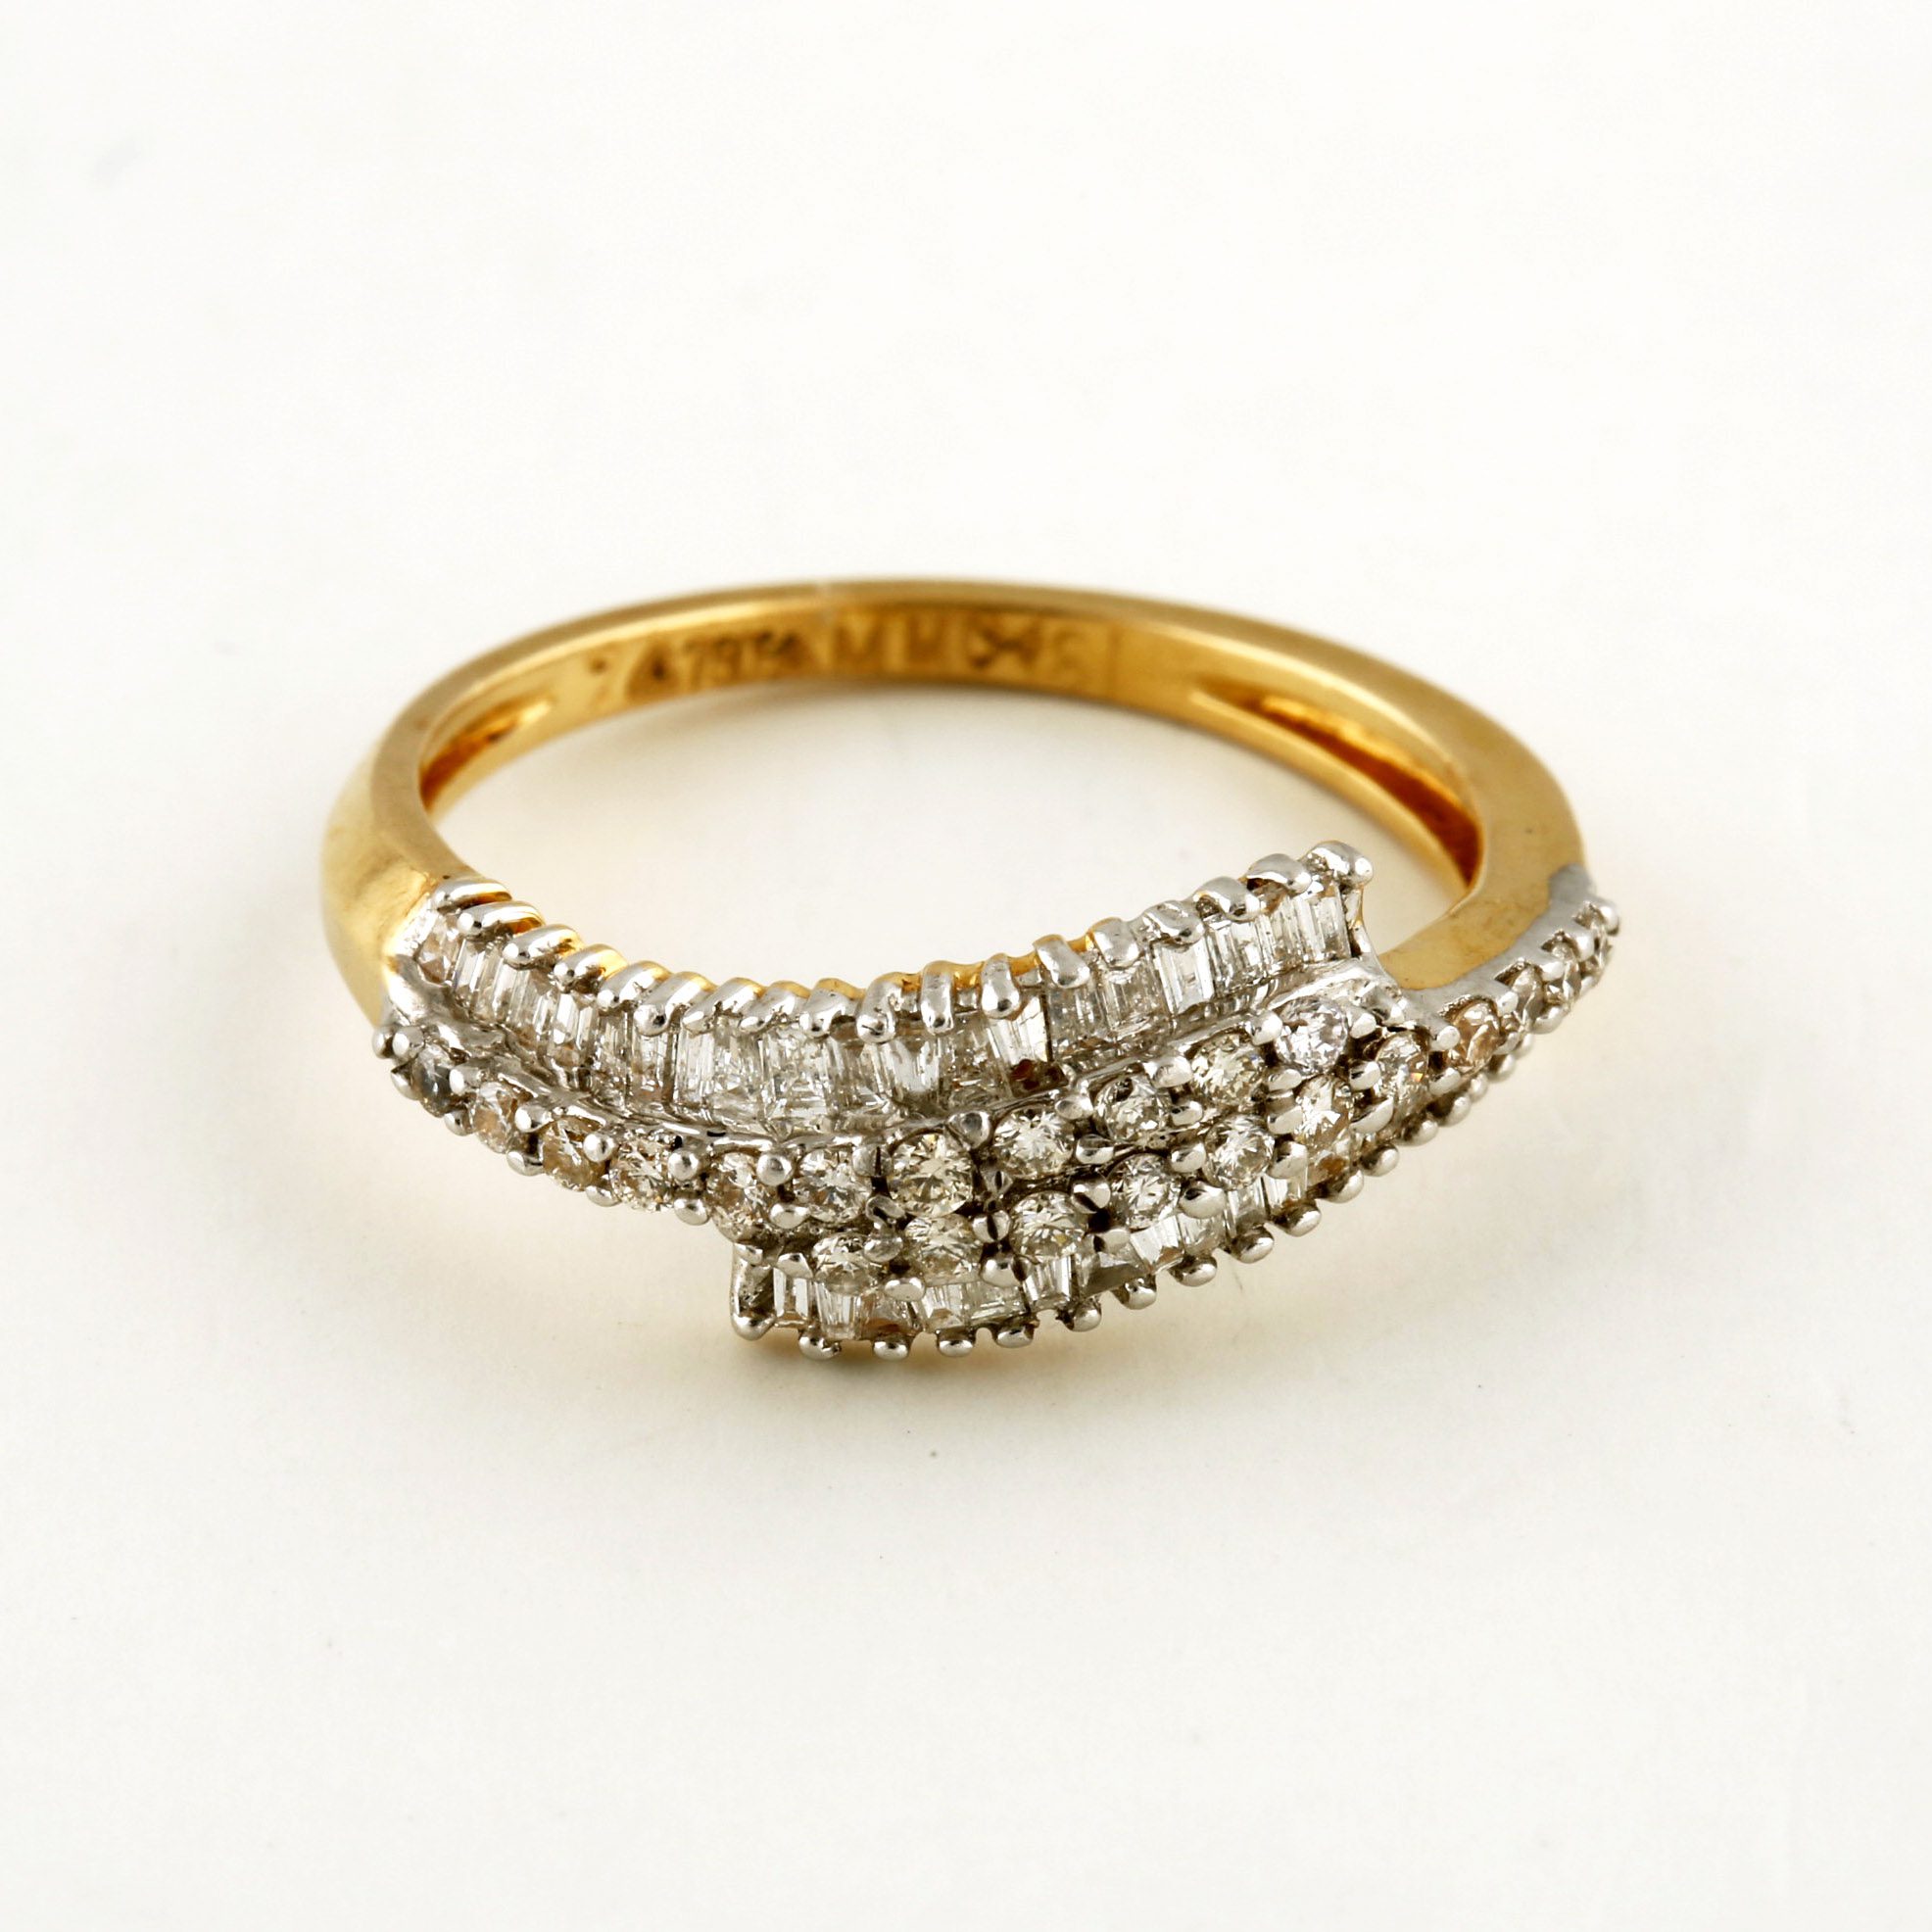 Buy Ruby Stone Ring Online, Manik Ring Gold Brass Price